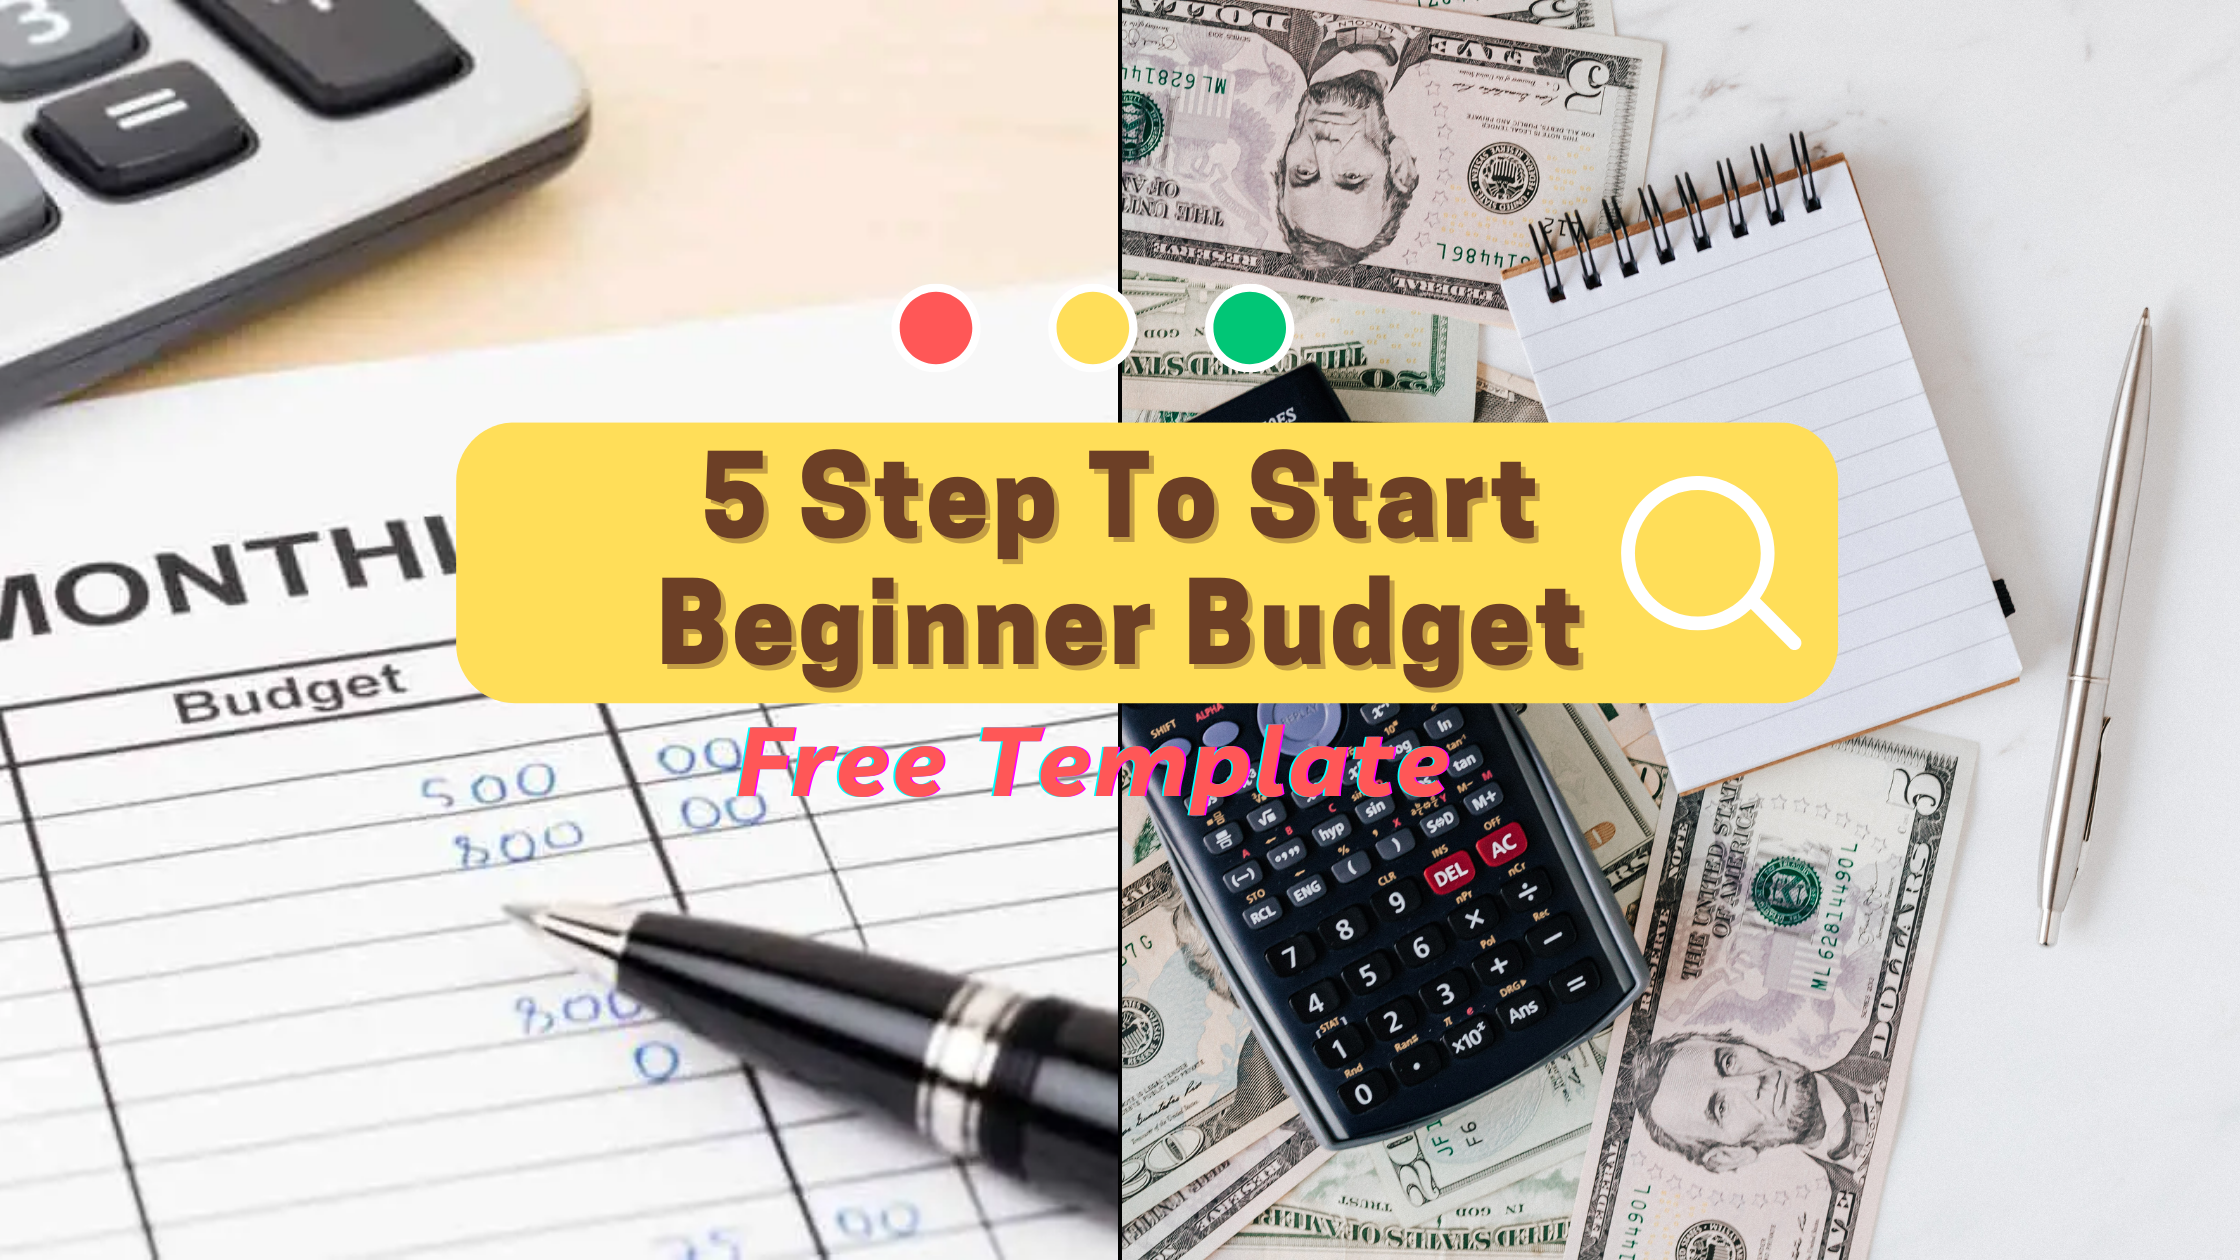 5 Step To Start Beginner Budget Free Template 2